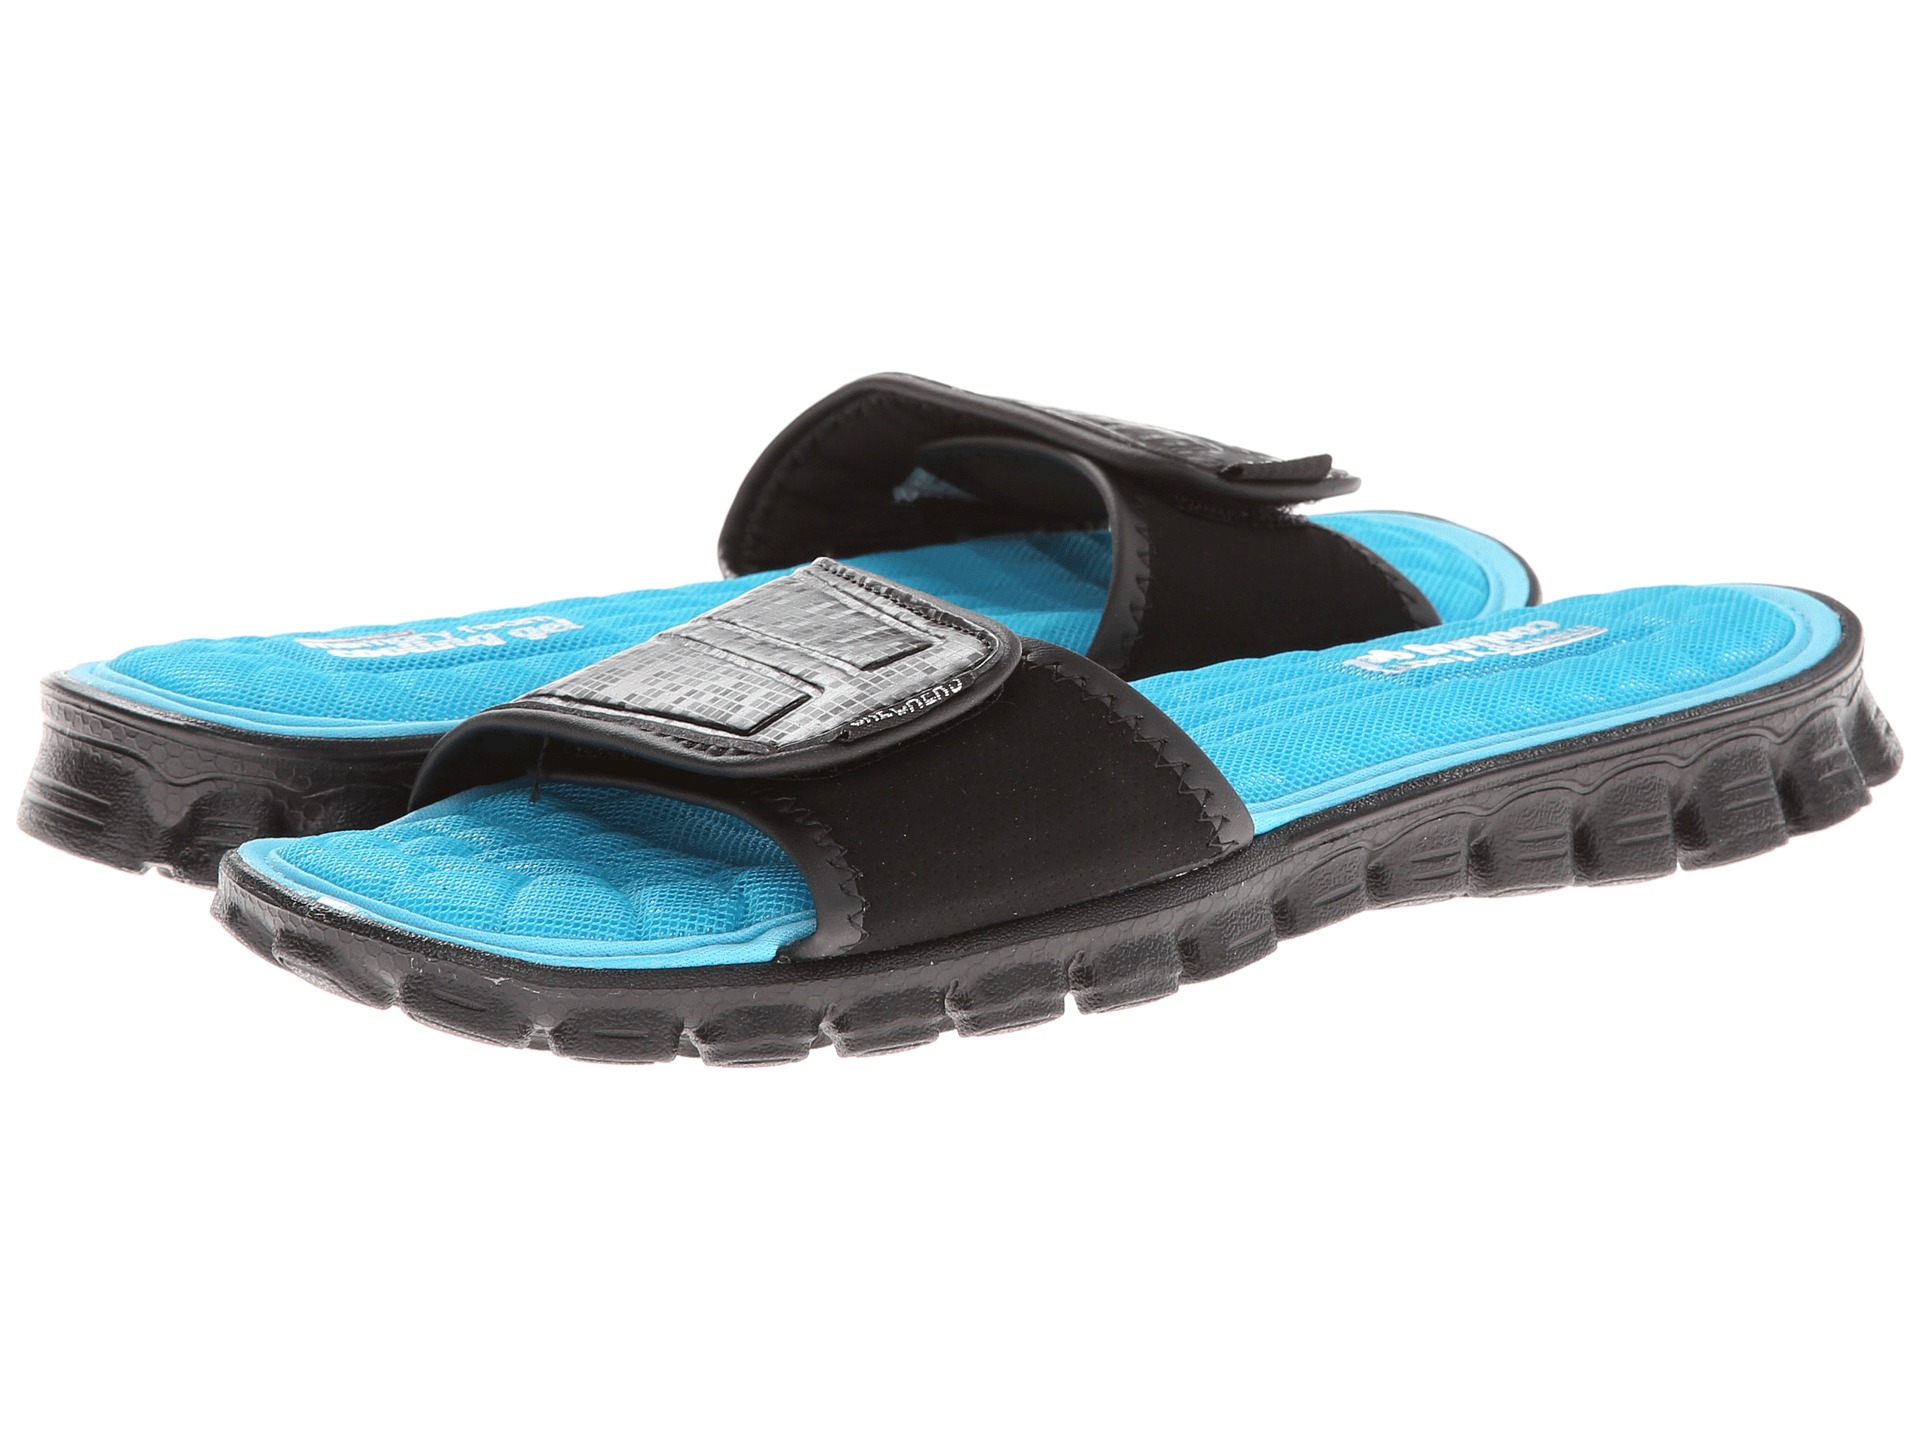 Skechers Sport Cooling Gel Slide Sandal | Shipped Free at Zappos